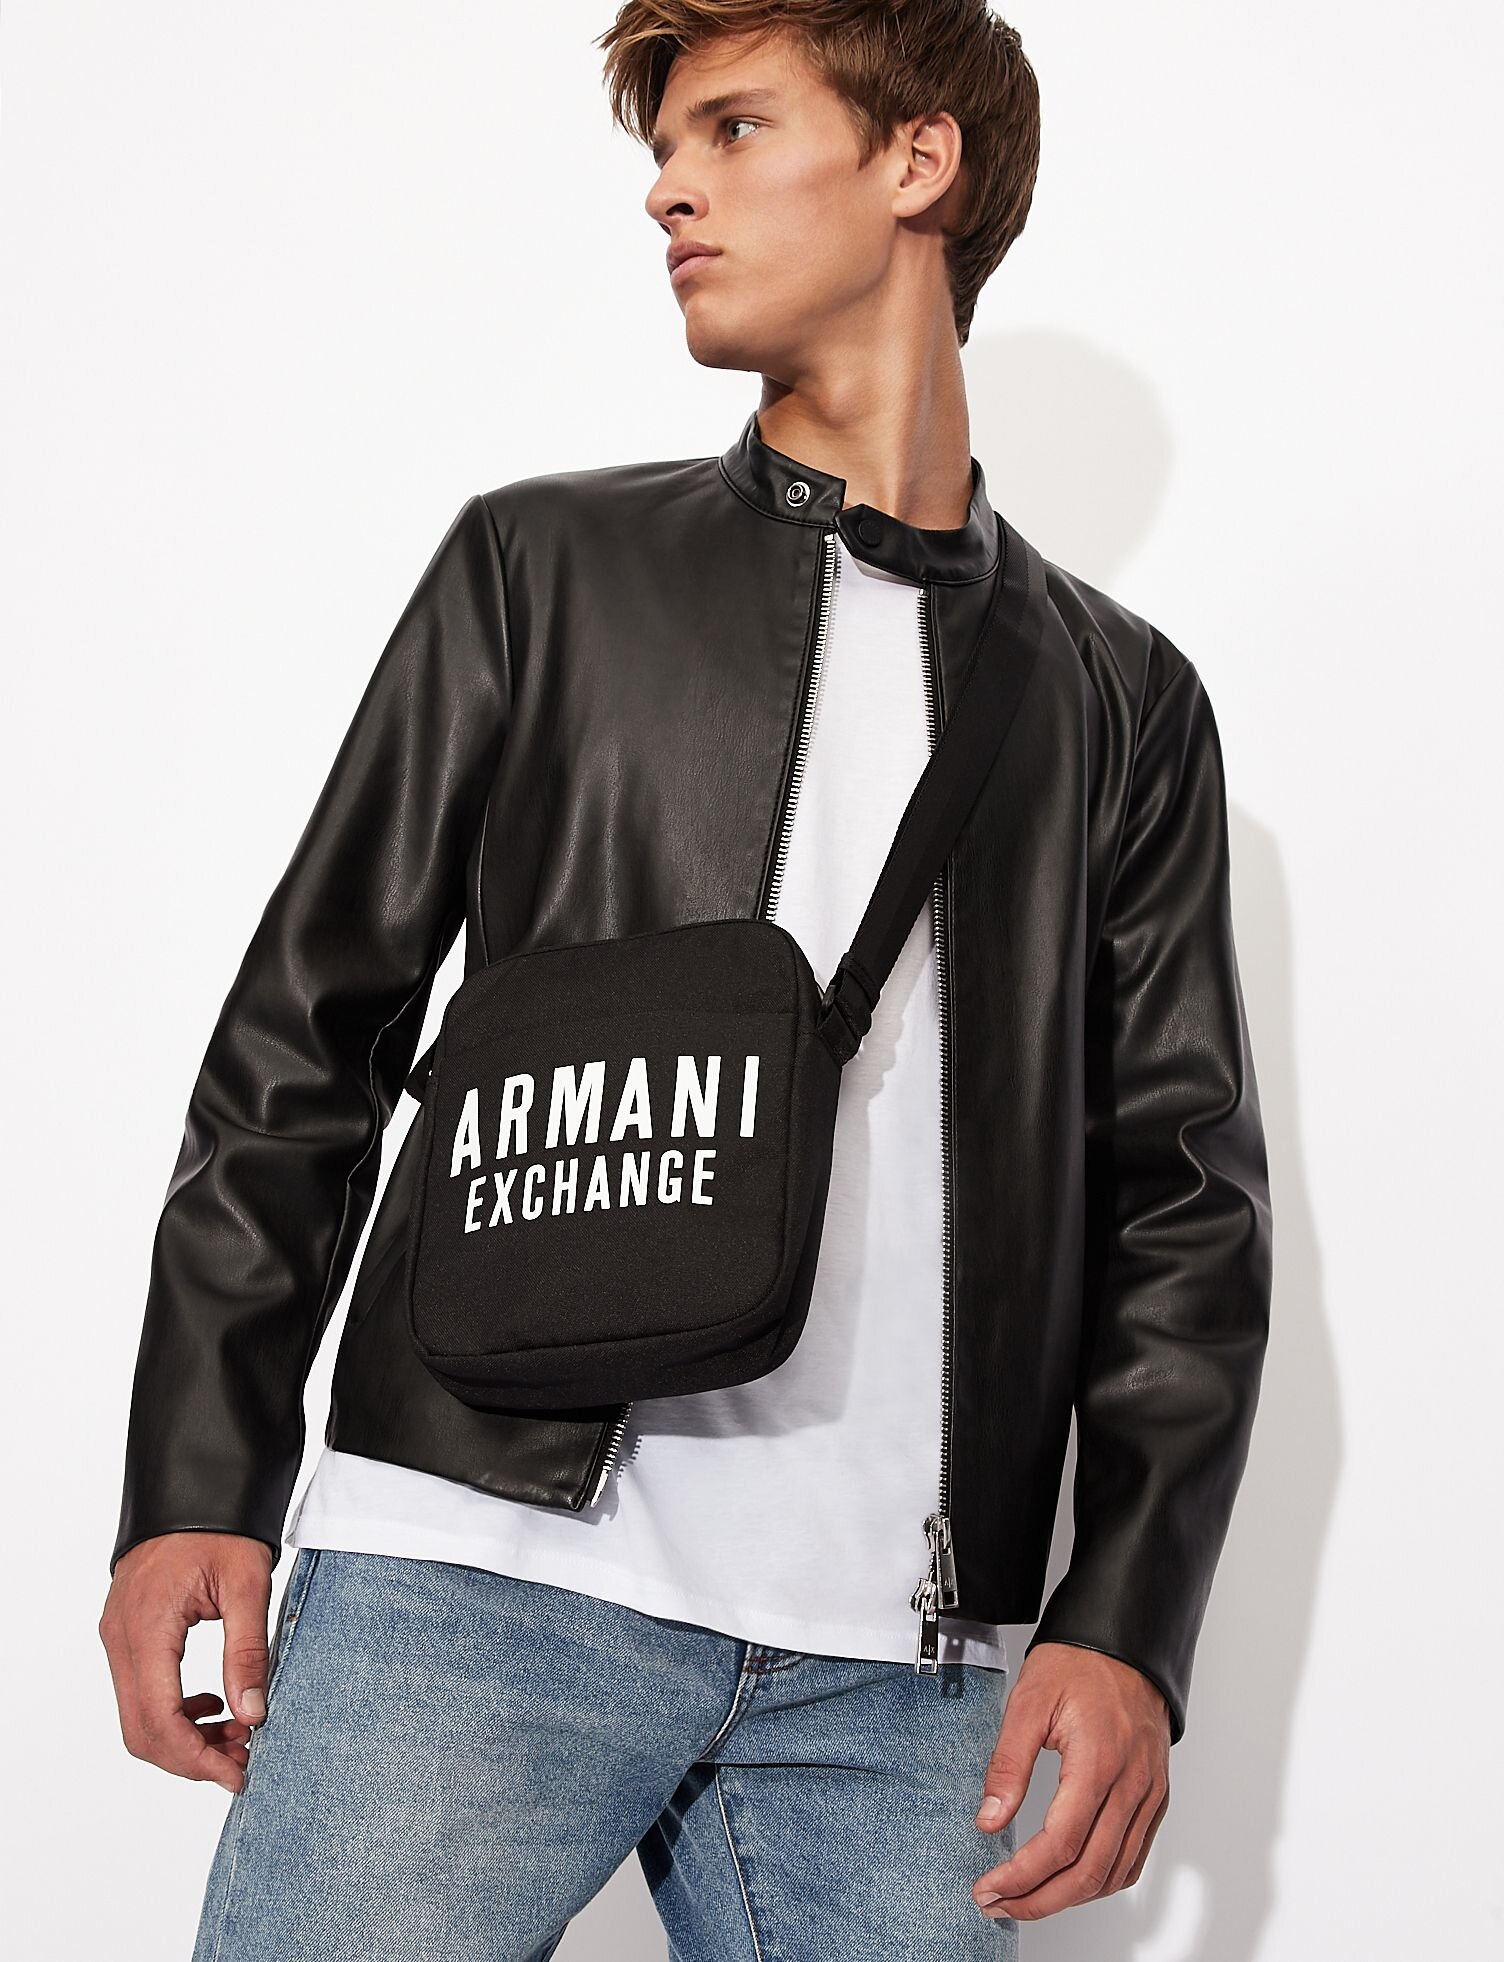 Armani Exchange_Nylon Shoulder Bag_P6,450_P3,870 02.jpeg